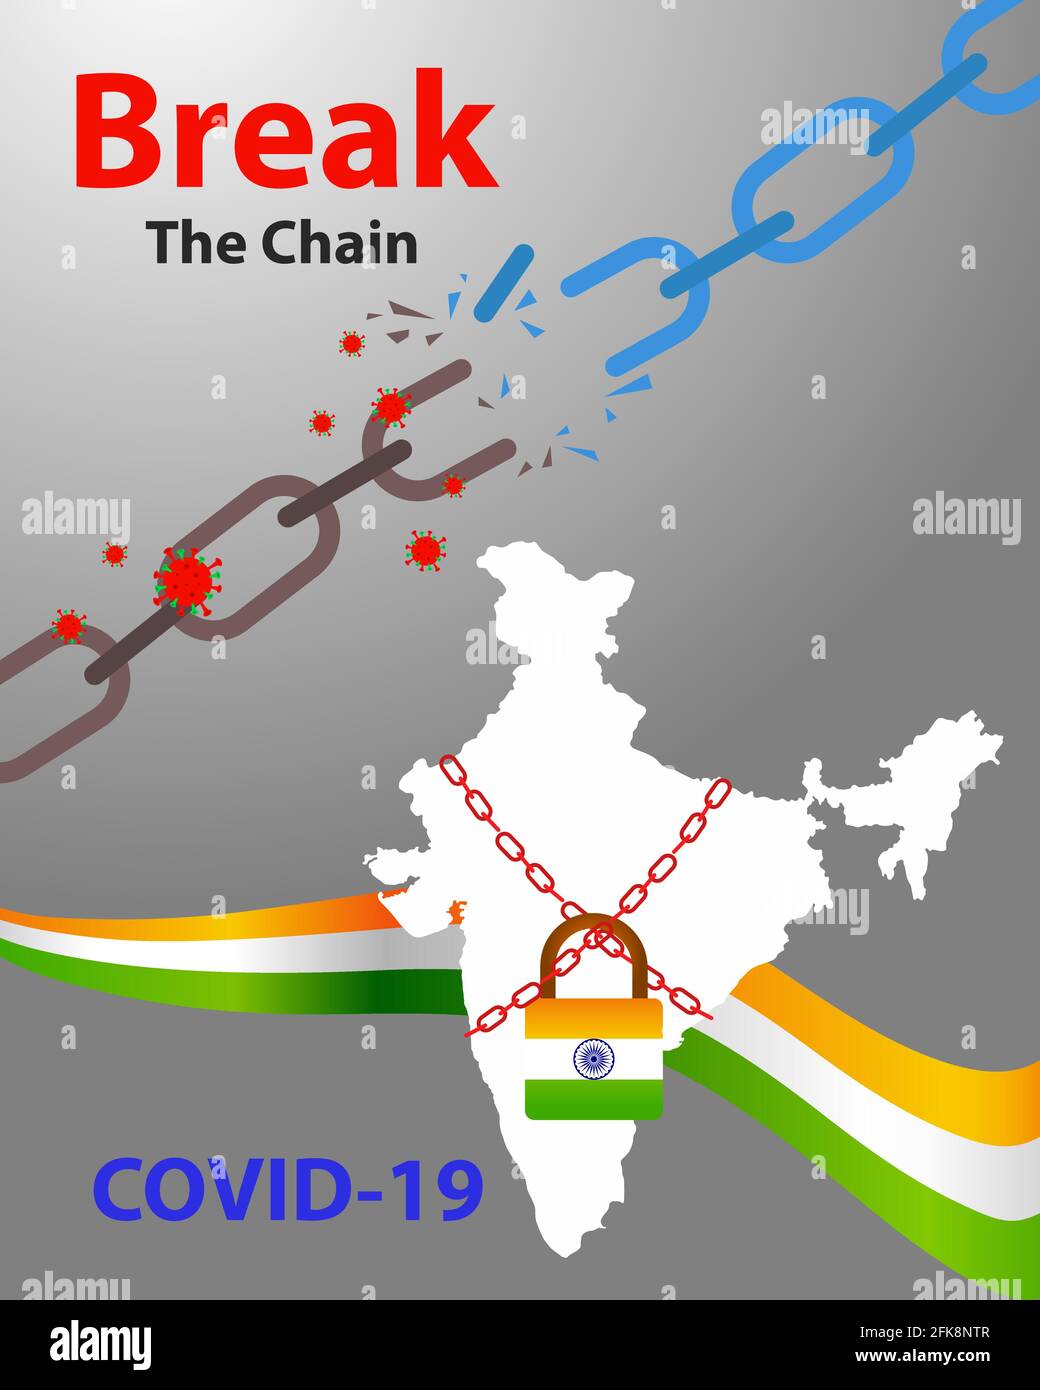 Stay Home and break the chain of CoronaVirus. Keep distance and overcome Covid-19. Corona warriors work from home. India against Novel Coronavirus. Stock Vector